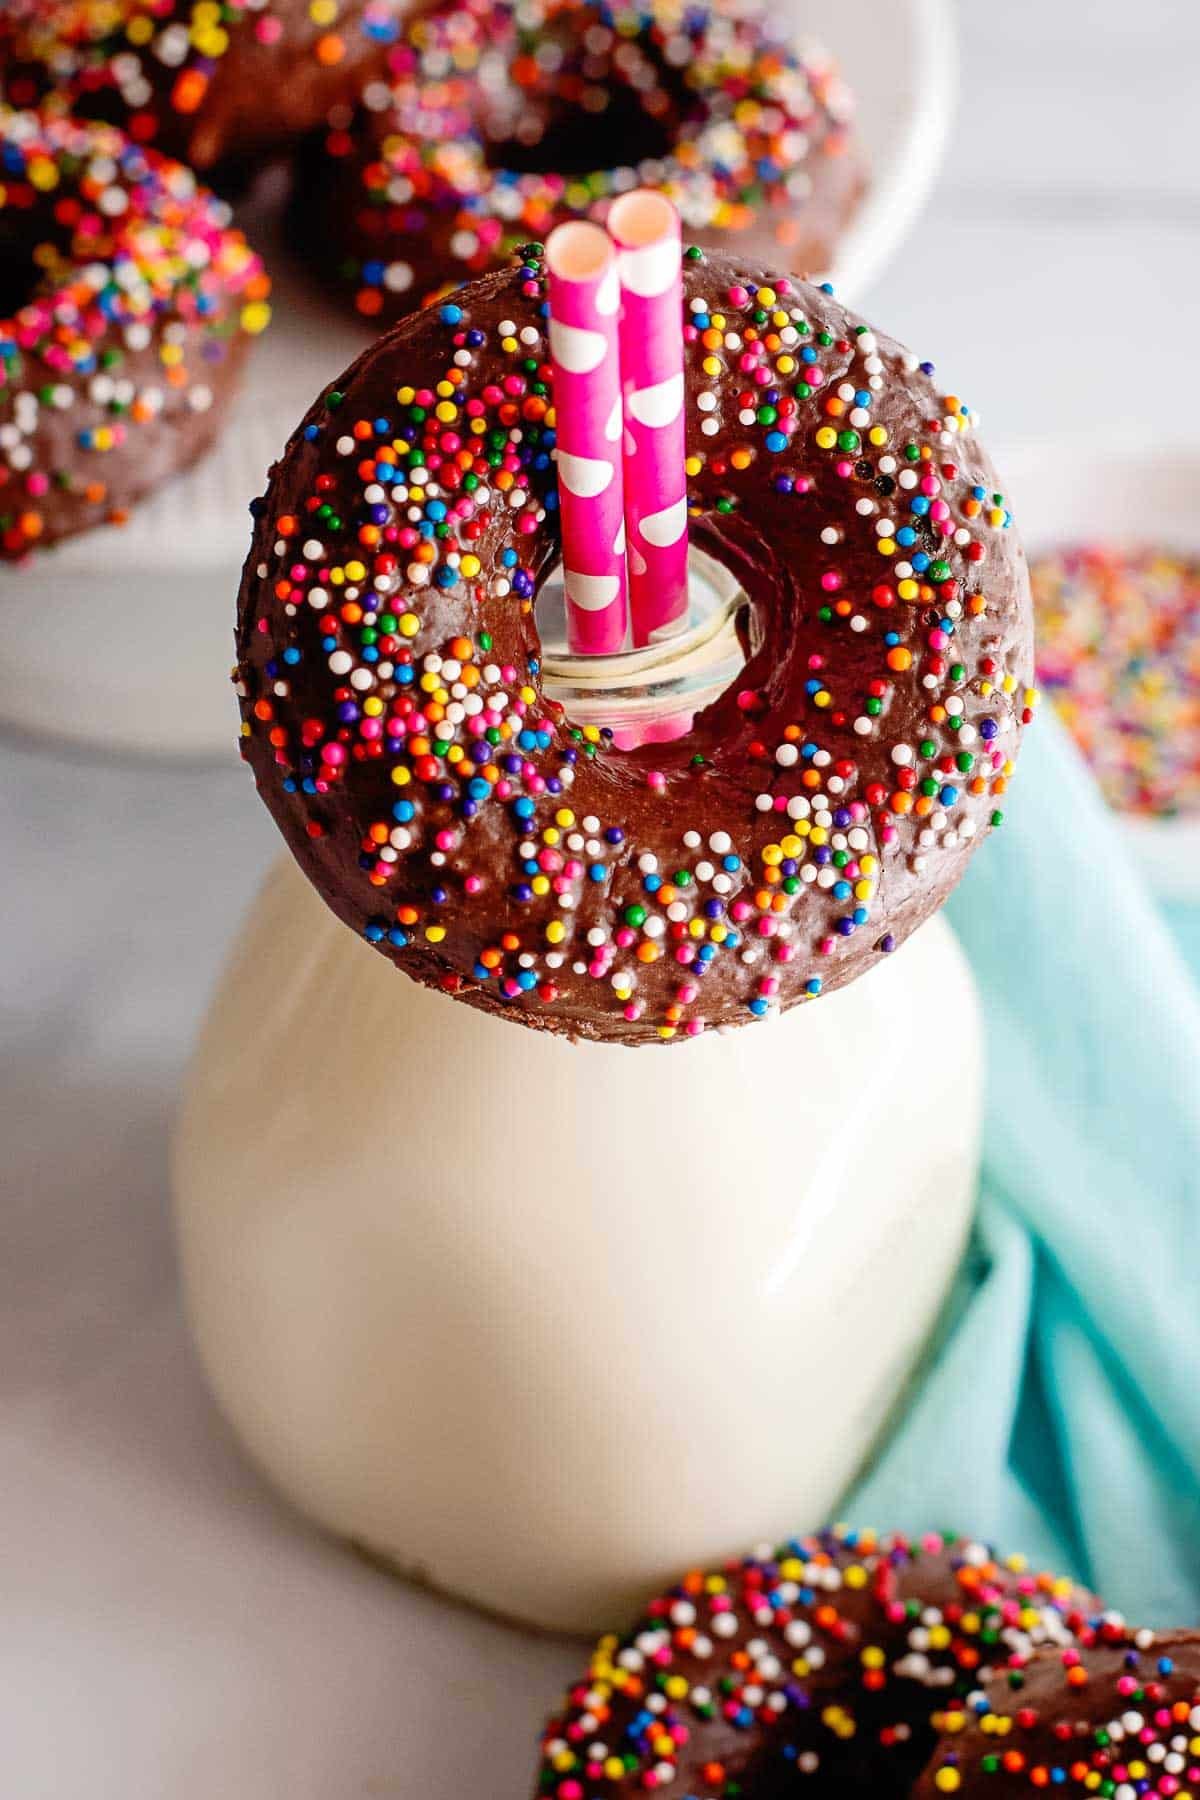 chocolate glazed donuts with milk bottle.